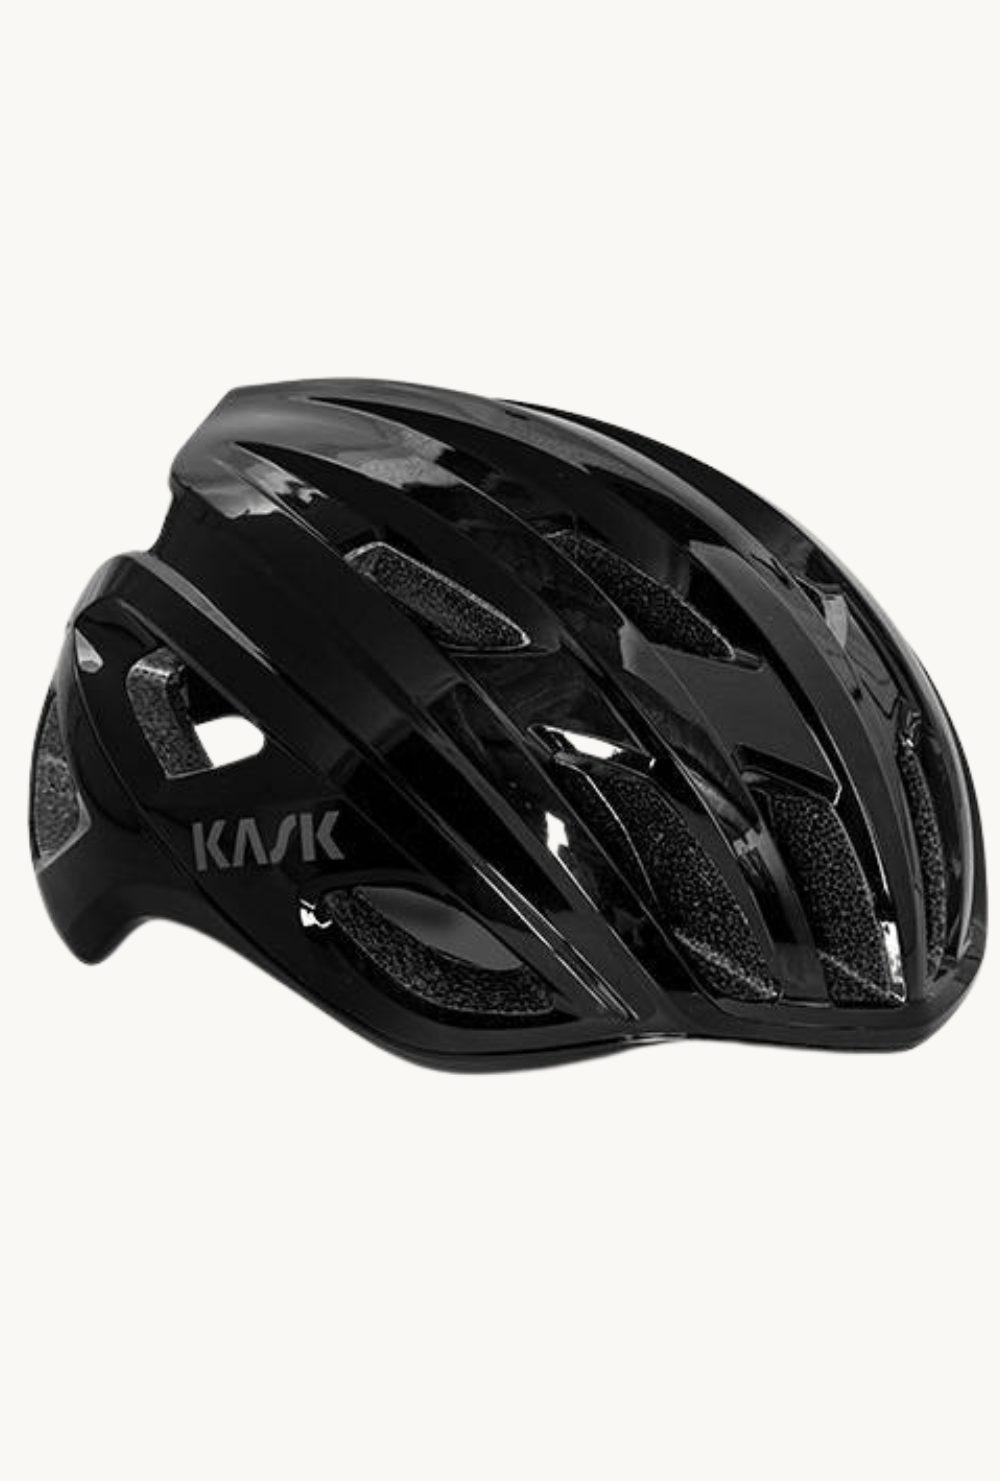 Helmet - Kask Mojito Blacklarge / Black